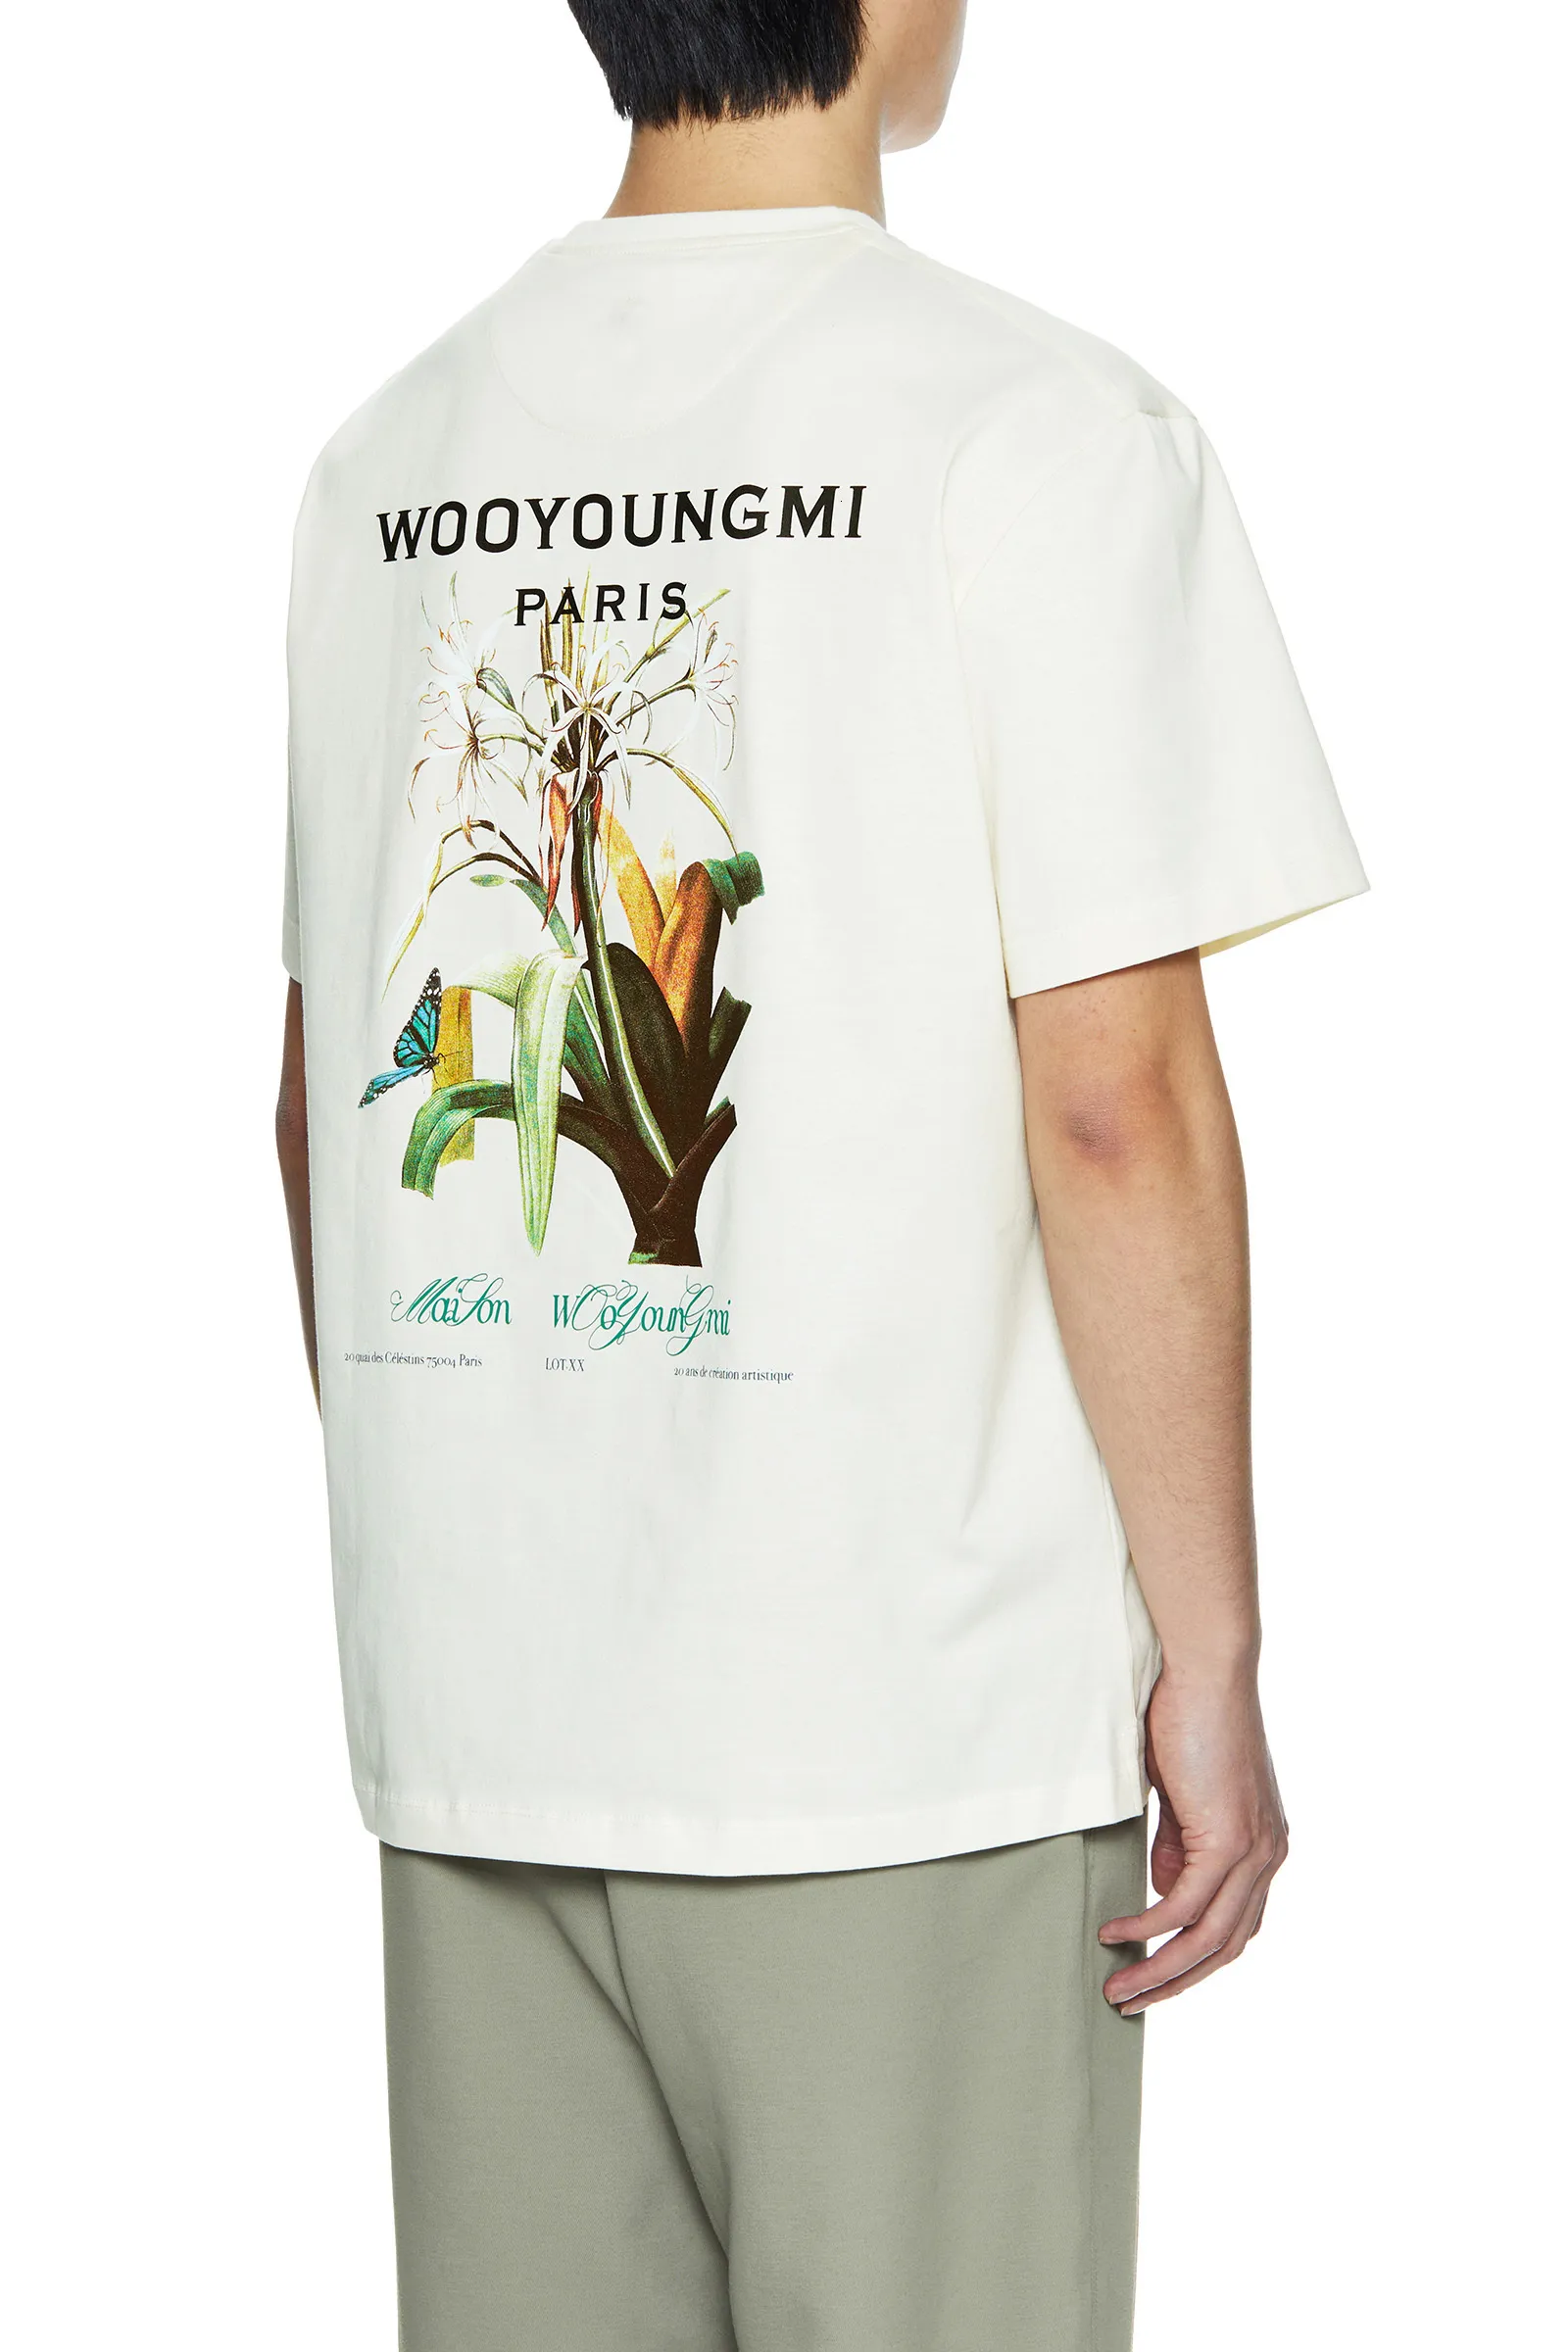 Wooyoungmi Luxury Cotton T-Shirt for Men, Korean Designer, Large Floral  Print, Summer Fit - 230720